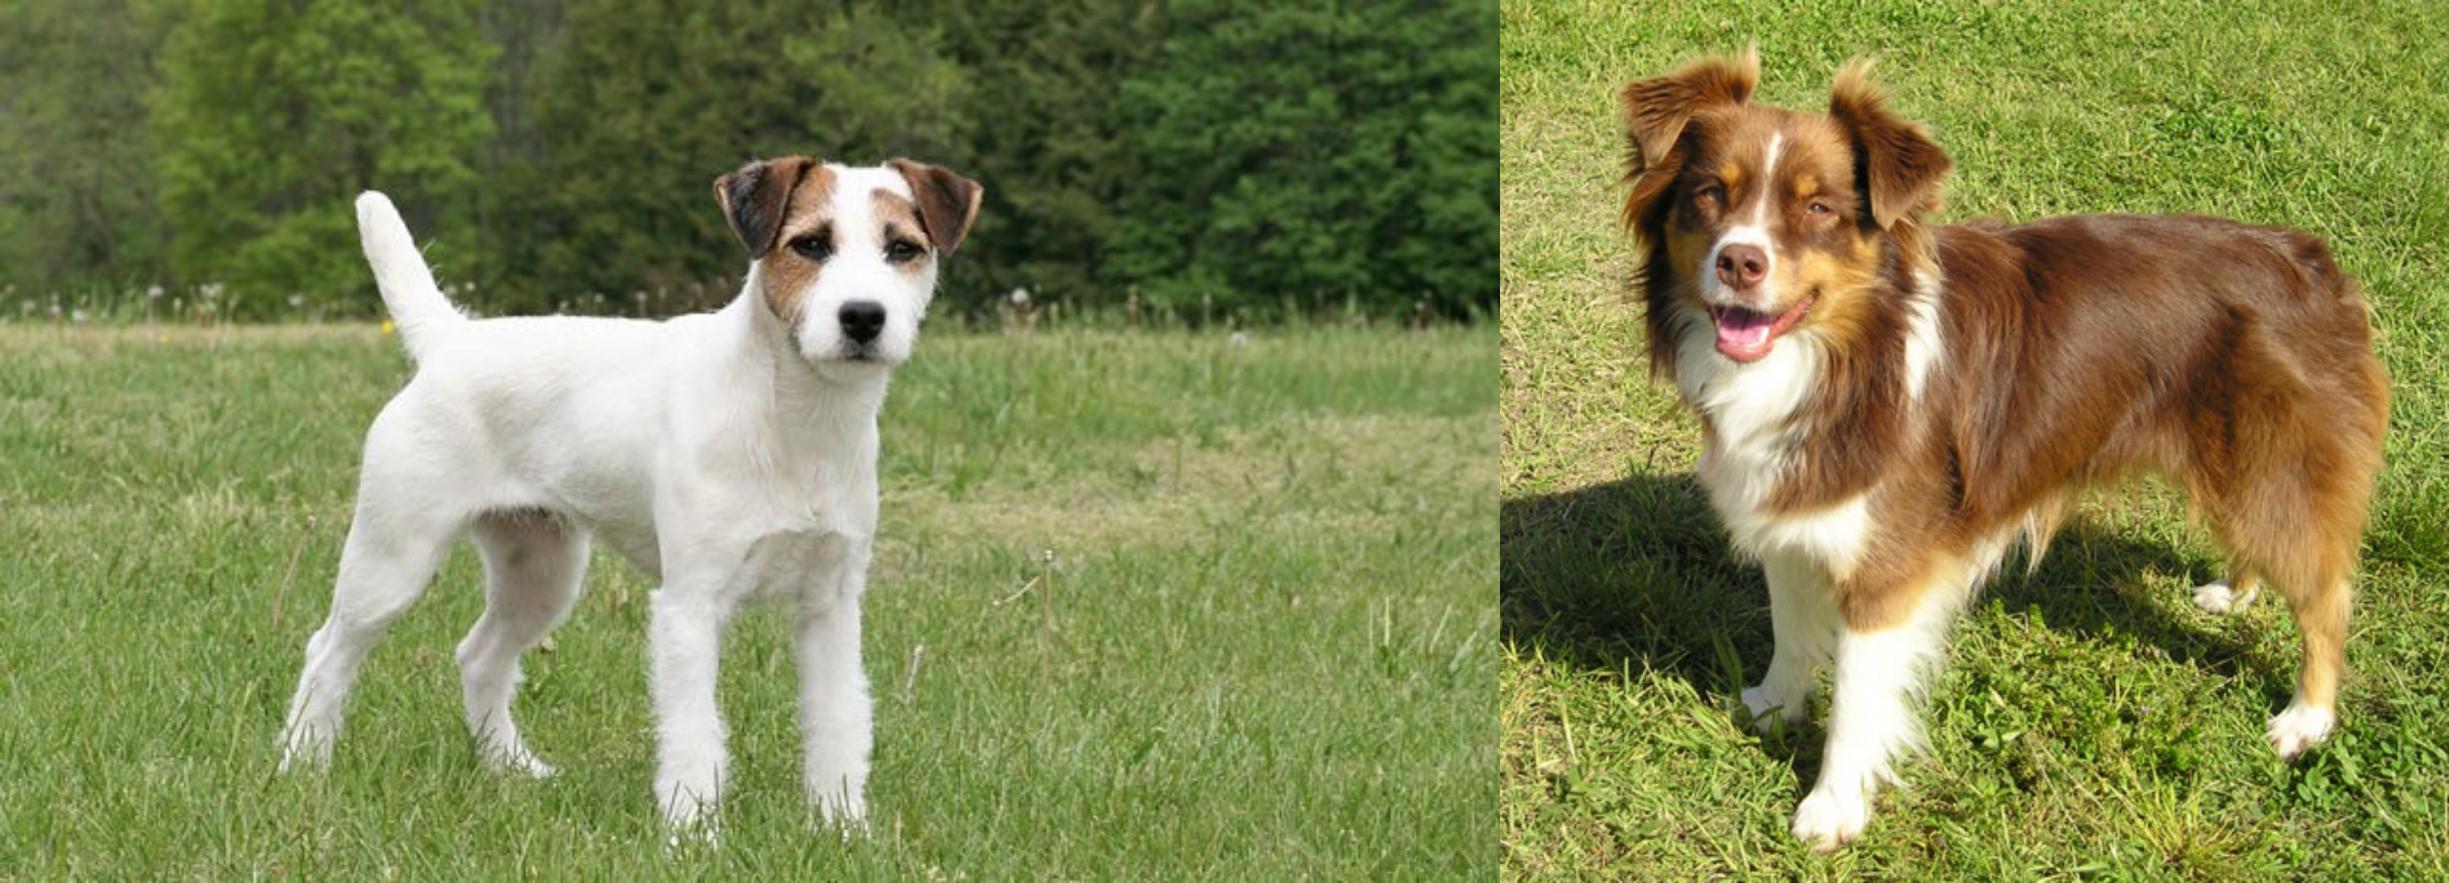 Miniature Australian Shepherd vs Jack Russell Terrier